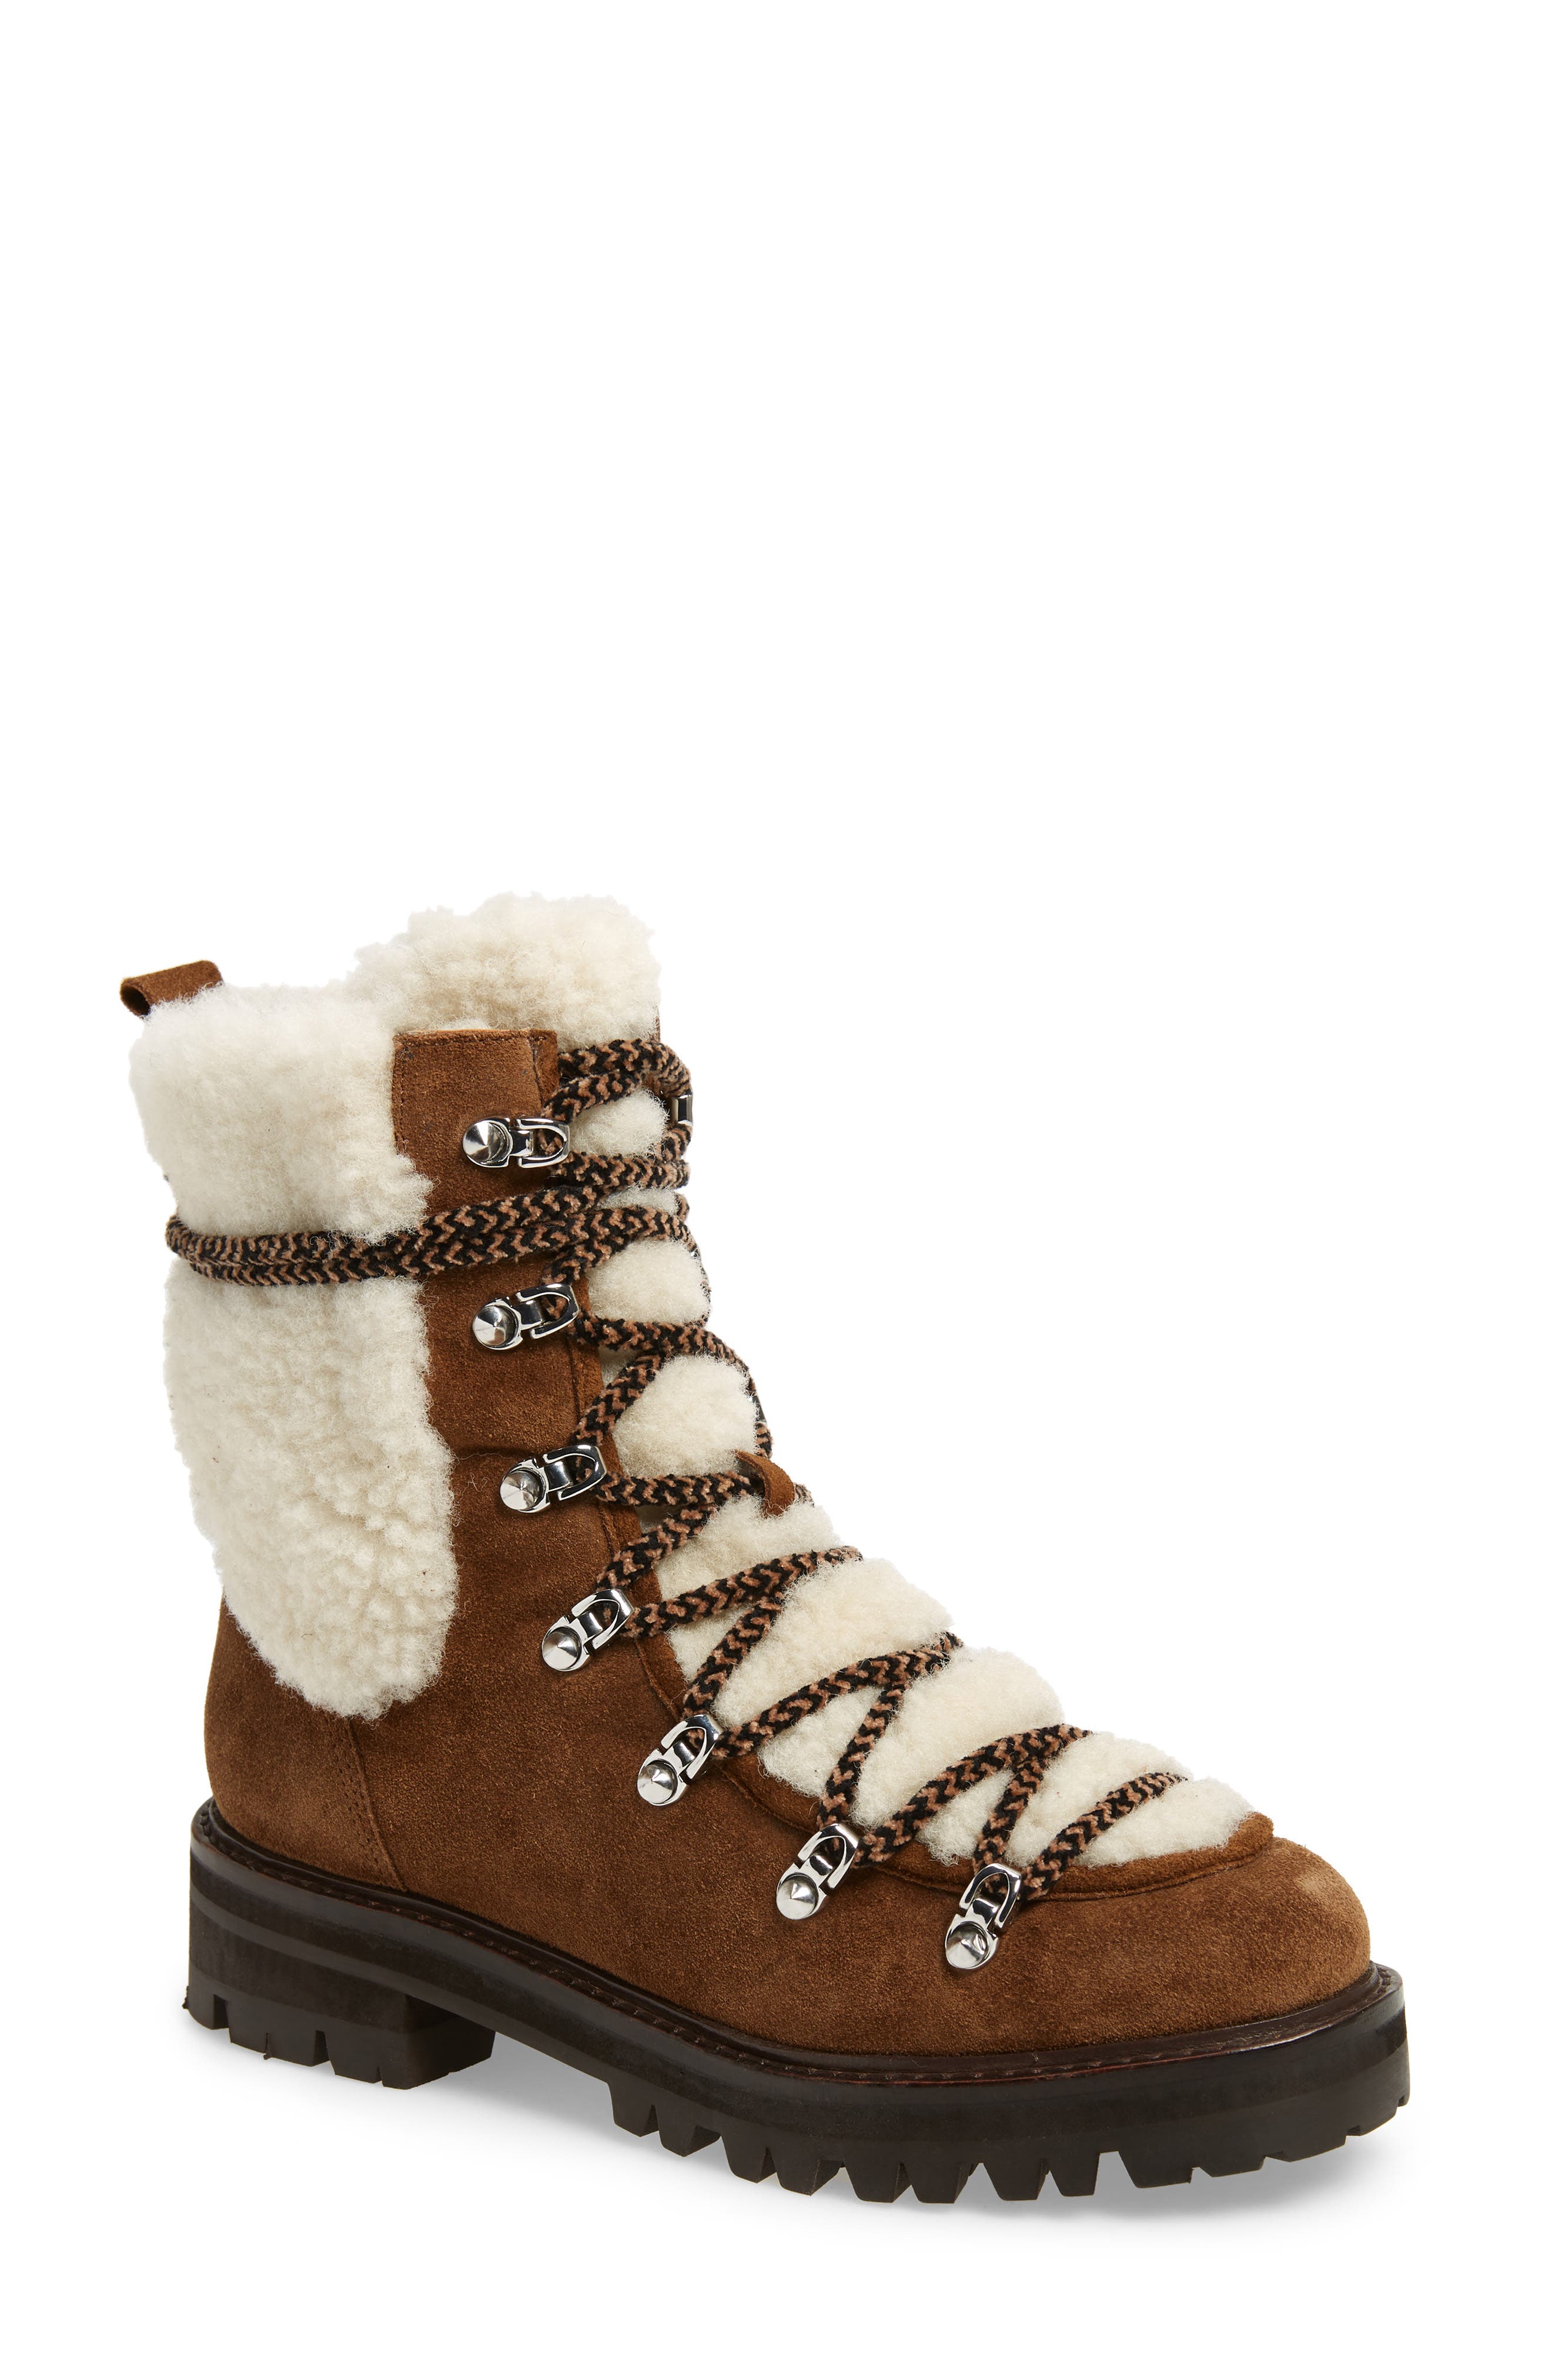 zappos mens dress boots